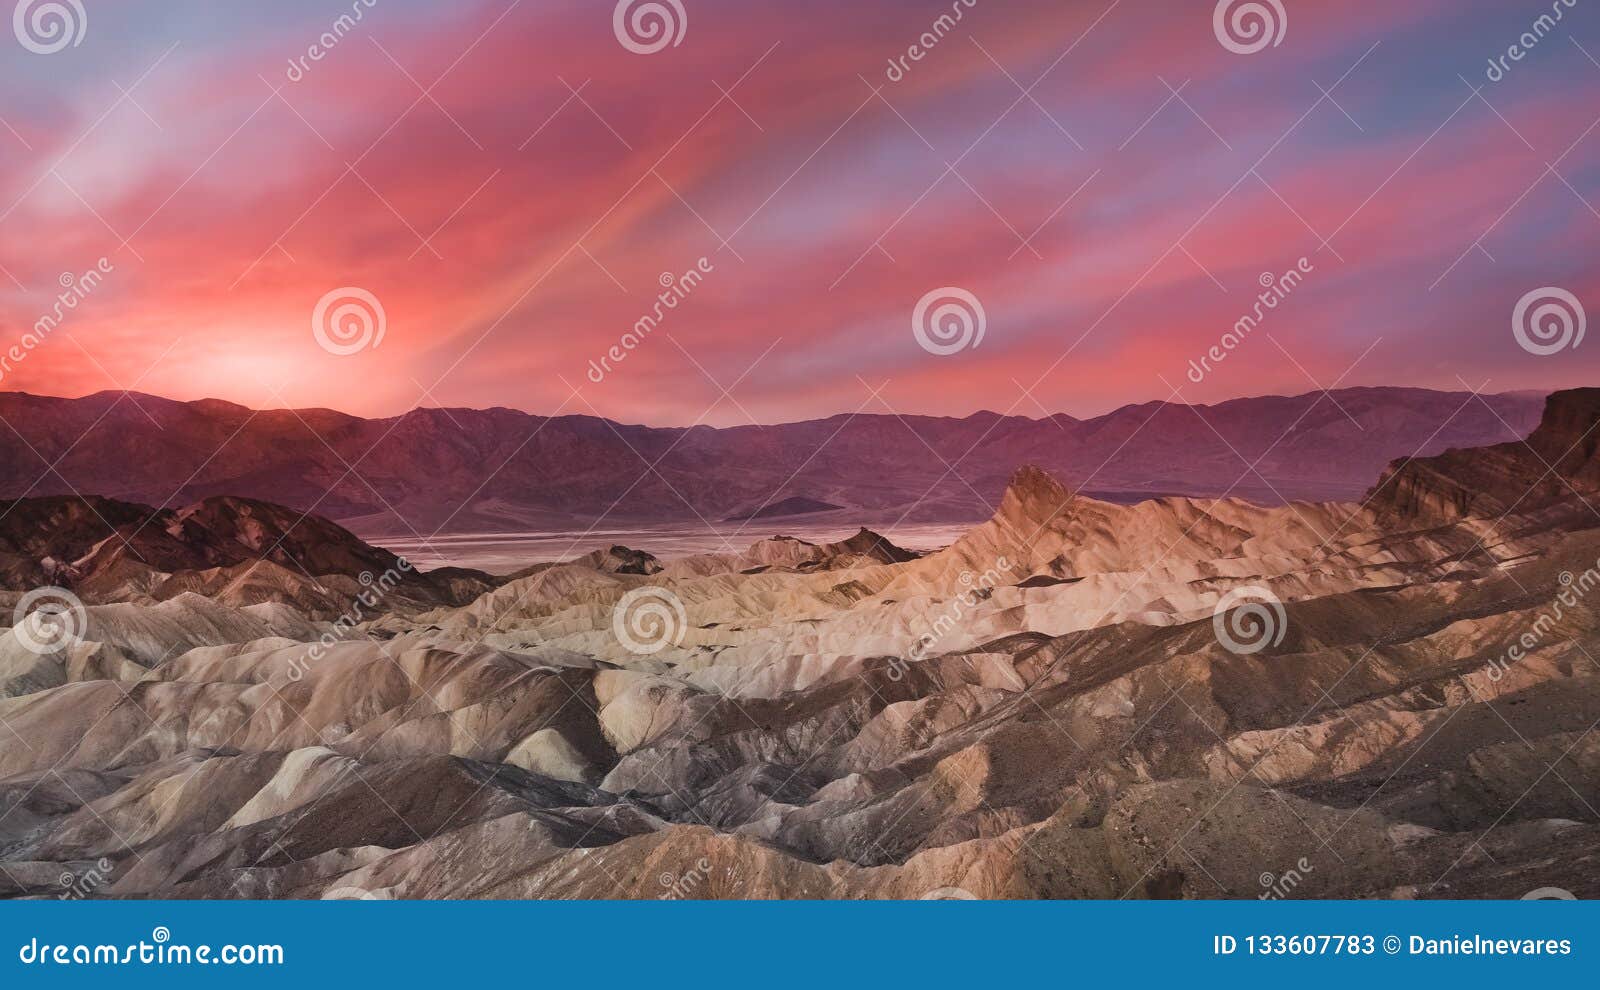 epic sunrise at zabriskie point in death valley national park